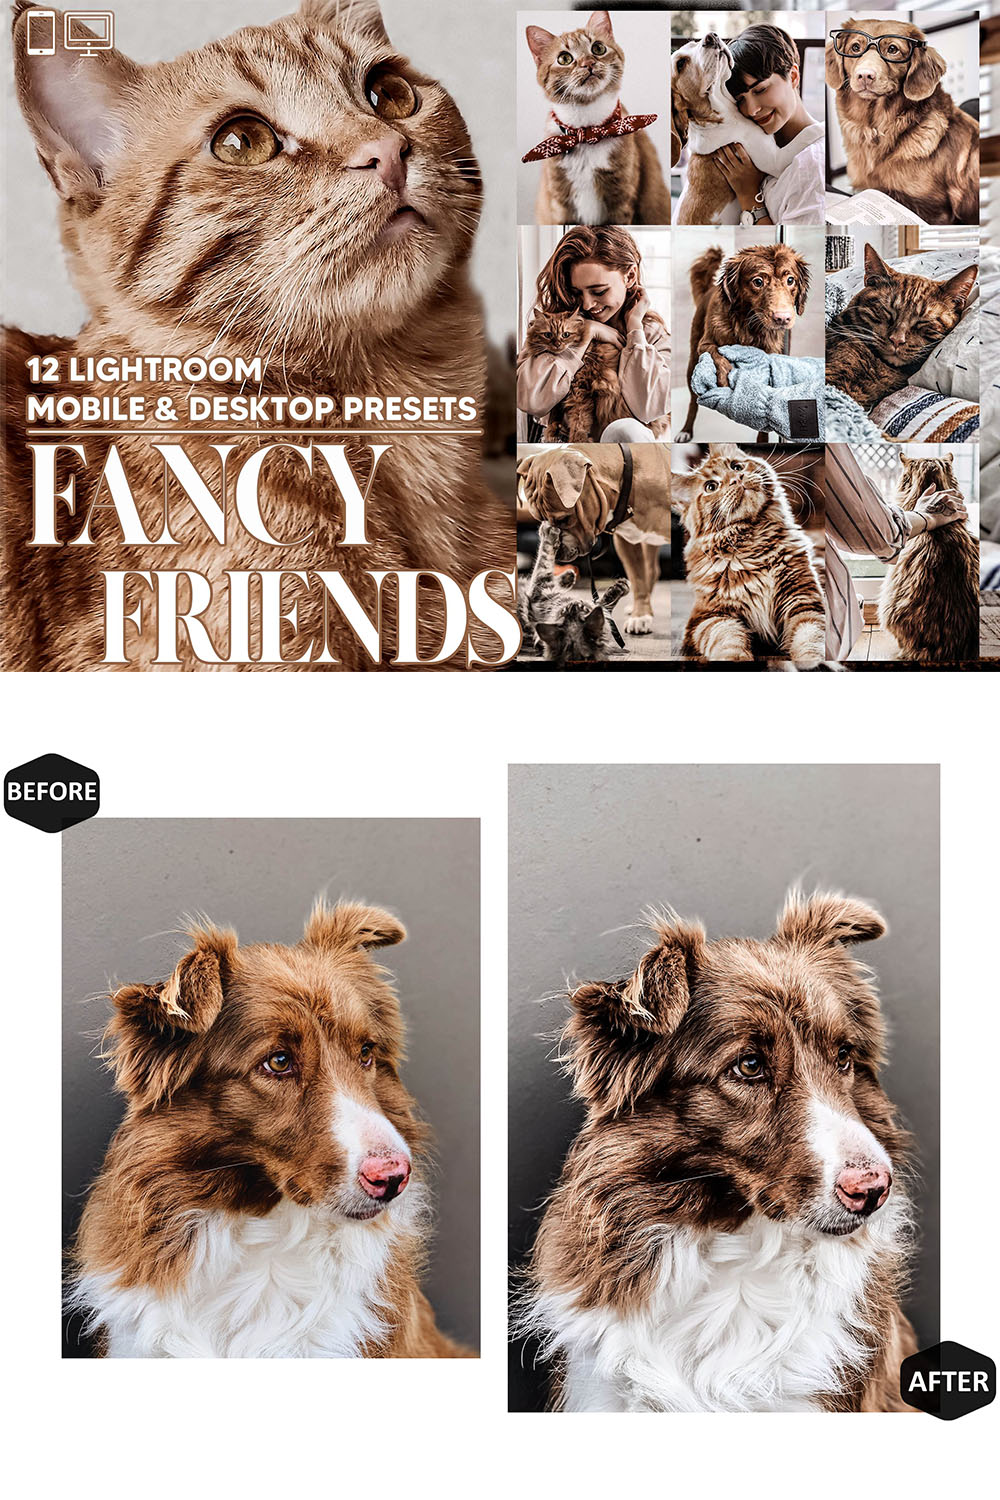 12 Fancy Friends Lightroom Presets, Animal Mobile Preset, Pet Desktop LR Lifestyle DNG Instagram Bright Filter Theme Portrait Season Doggie pinterest preview image.